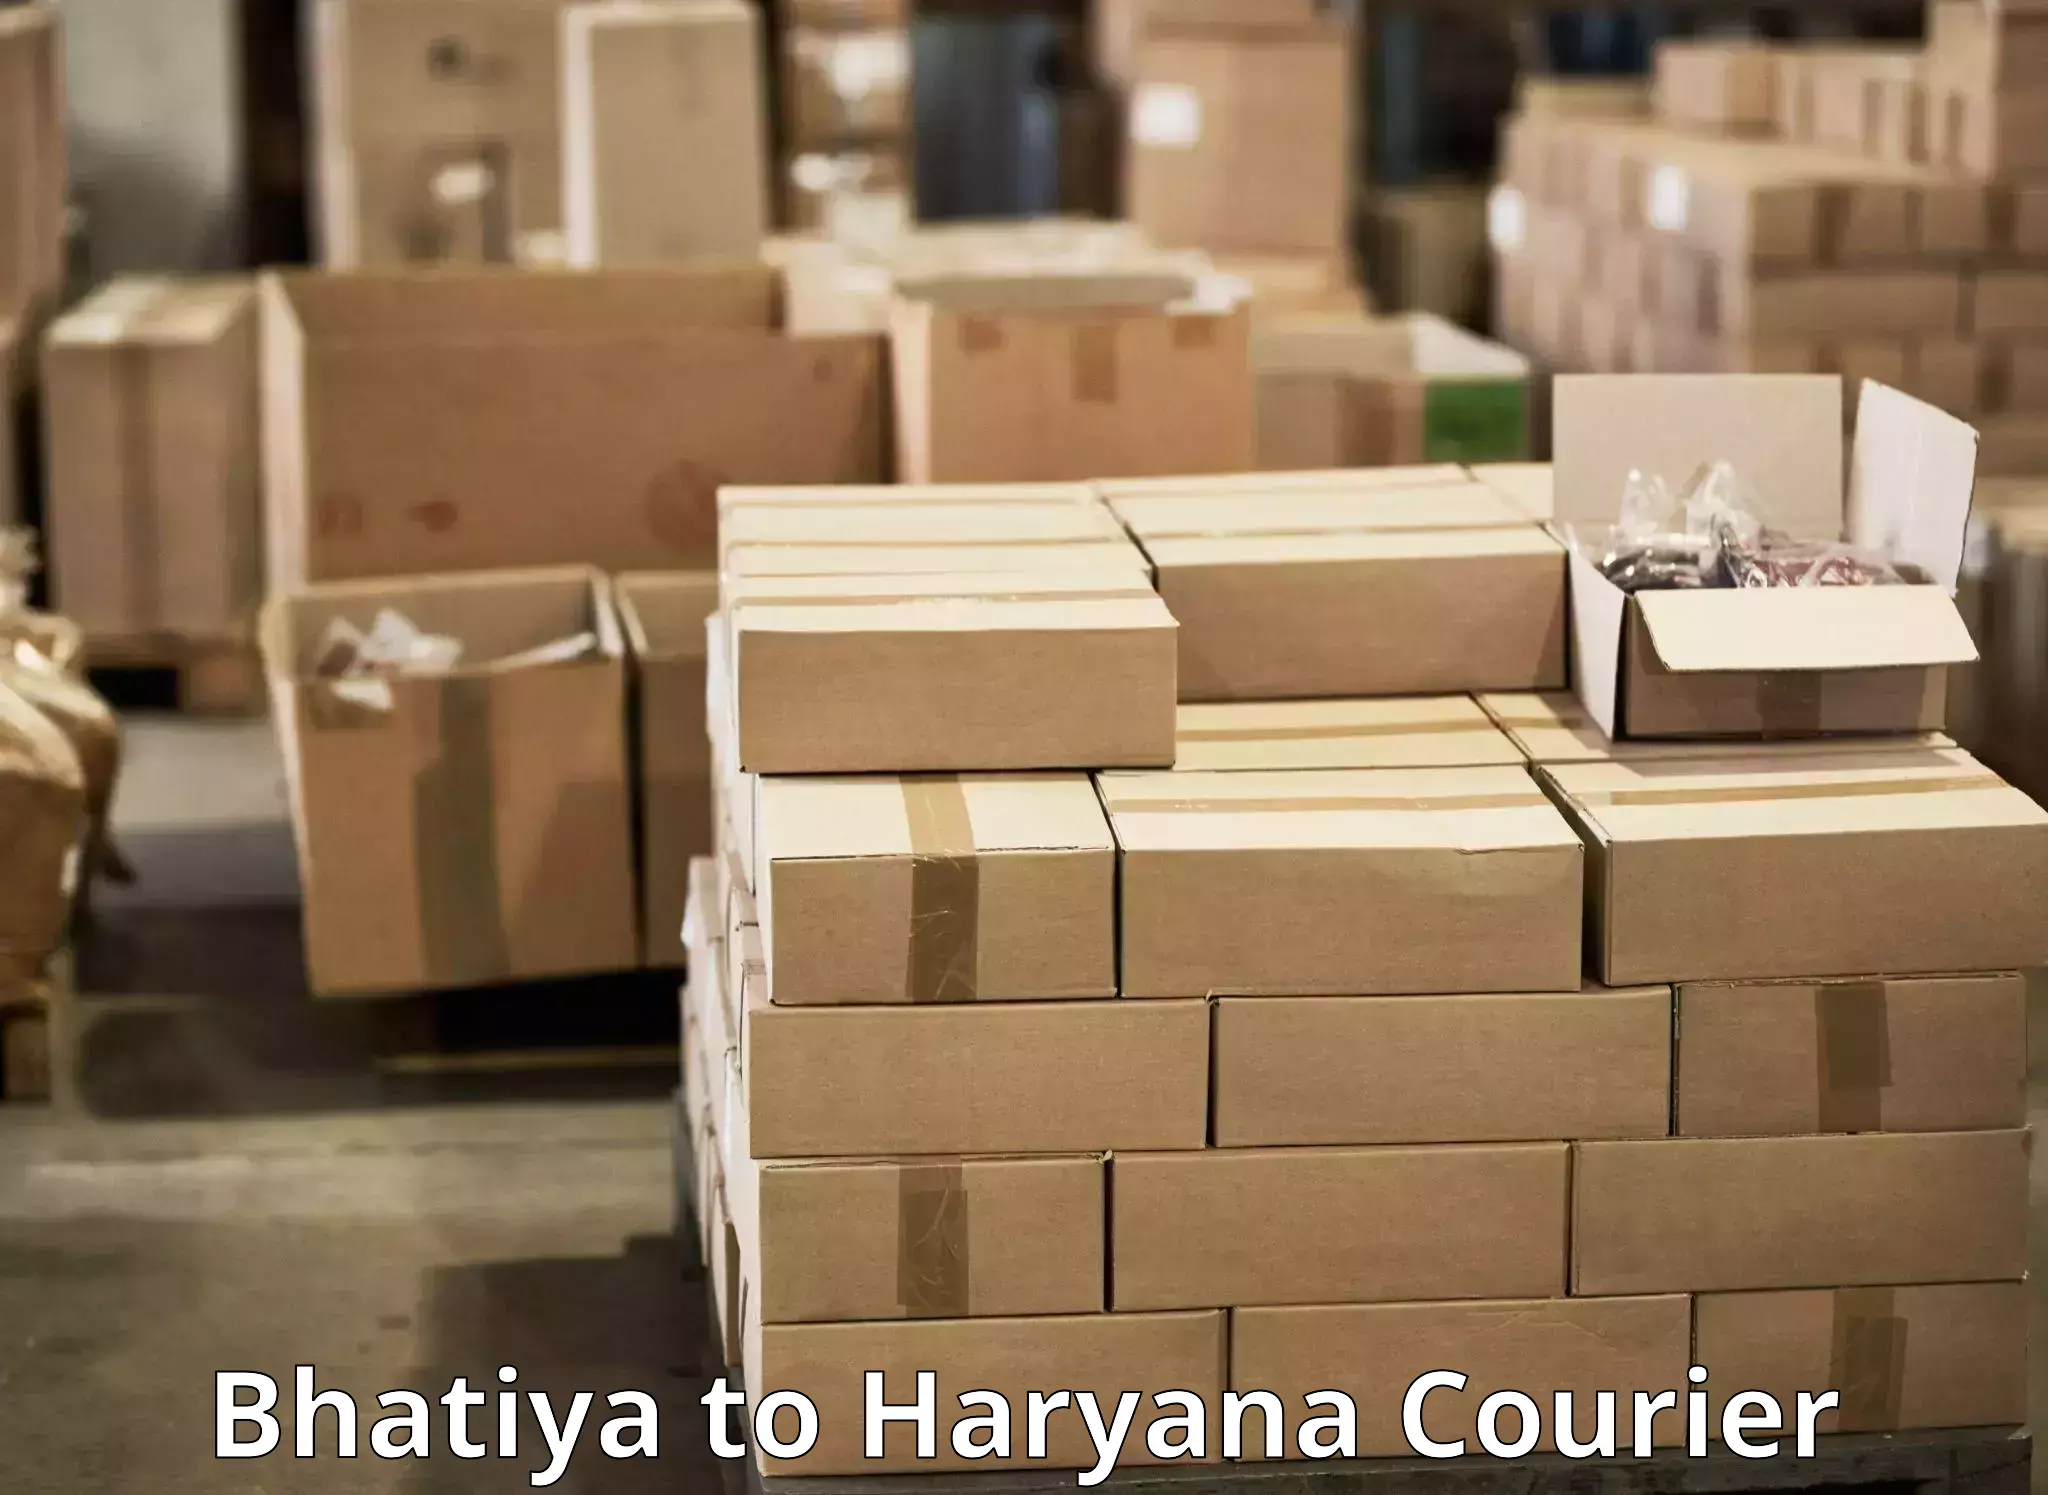 Seamless shipping experience in Bhatiya to NCR Haryana